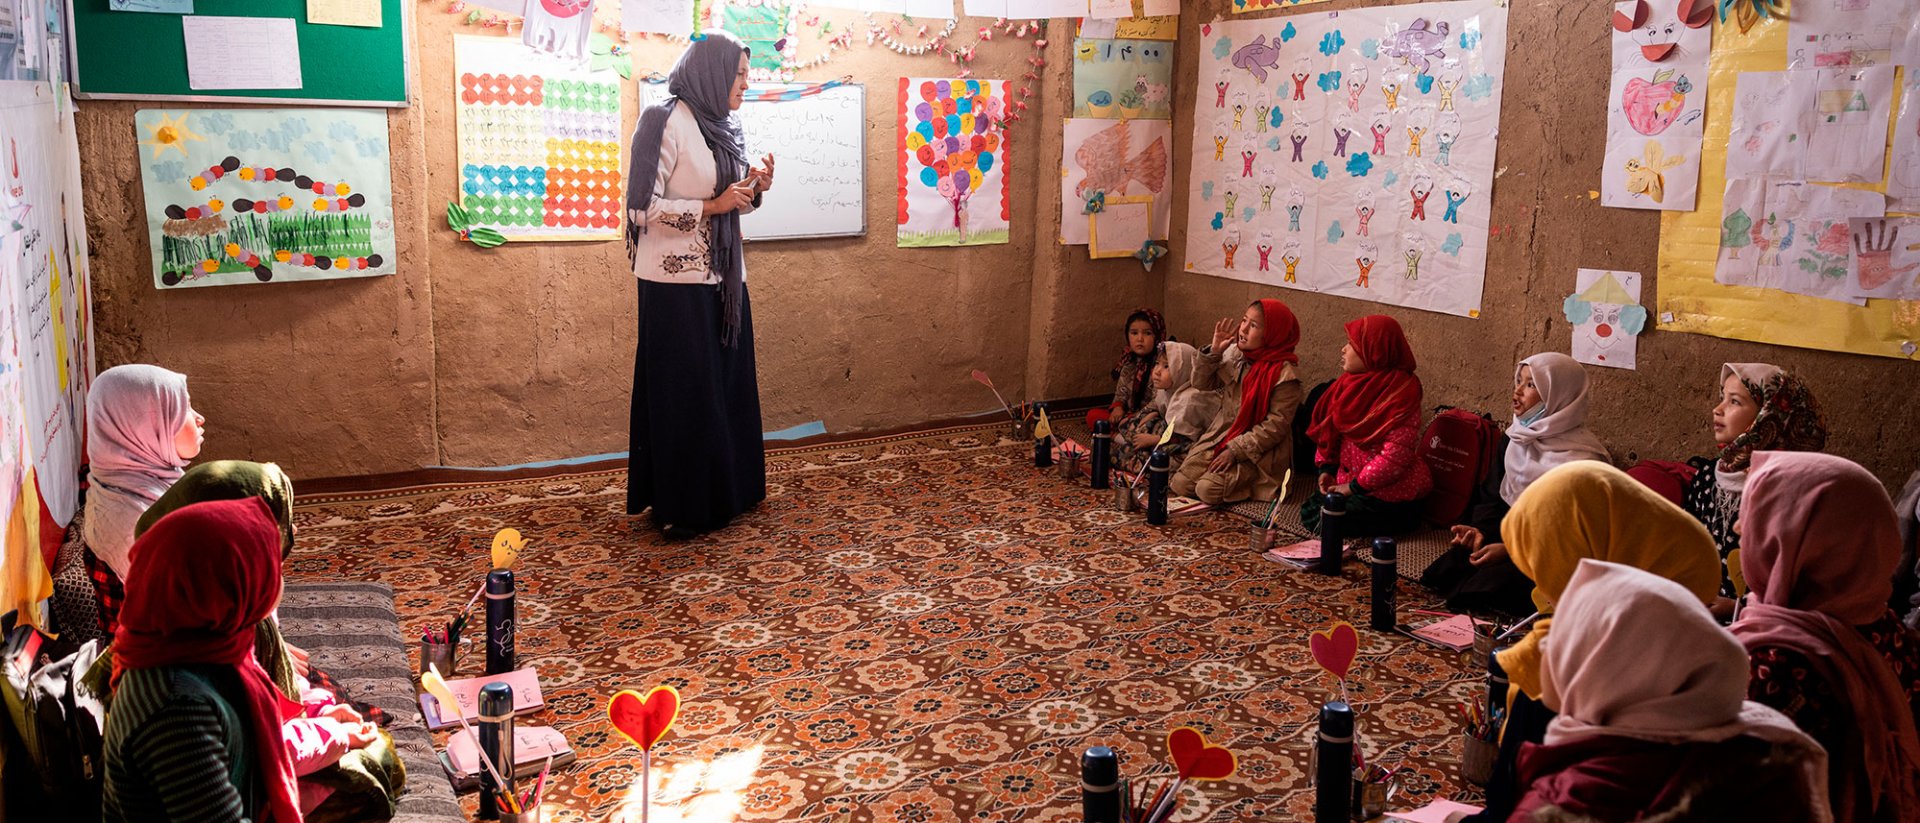 afganistan-niñas-educación